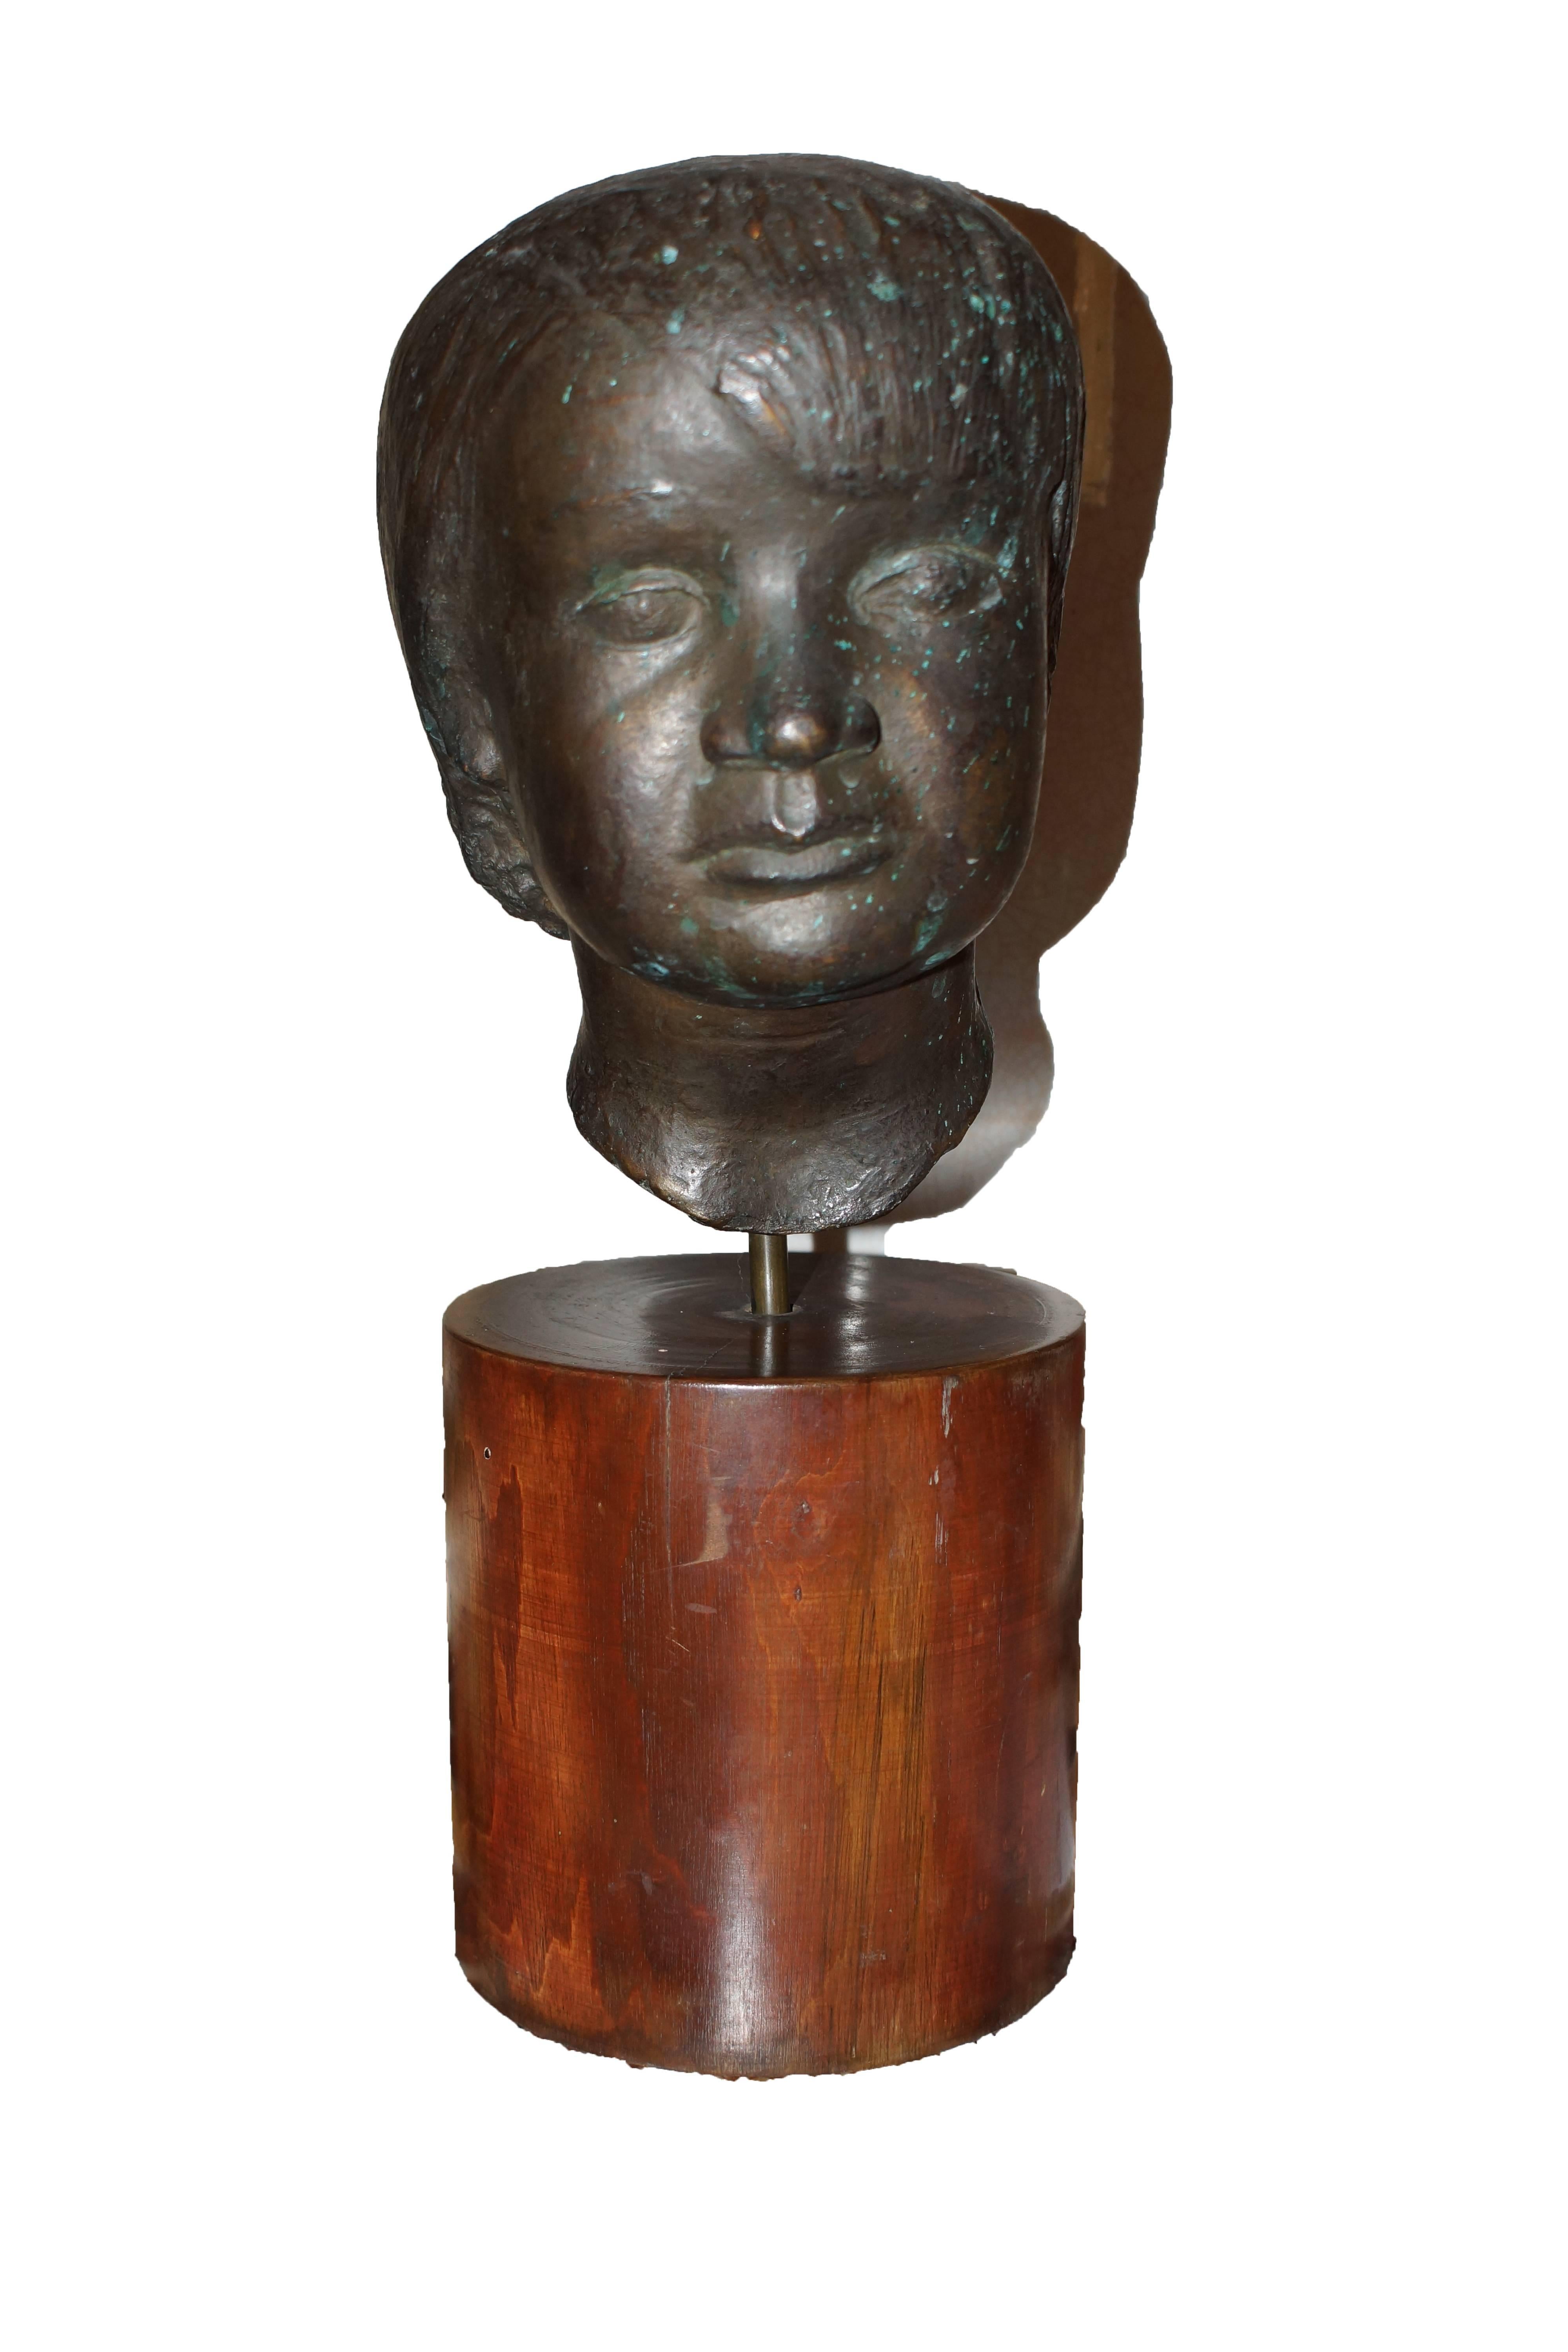 Marino Marini Figurative Sculpture – Kopf eines jungen Jungen